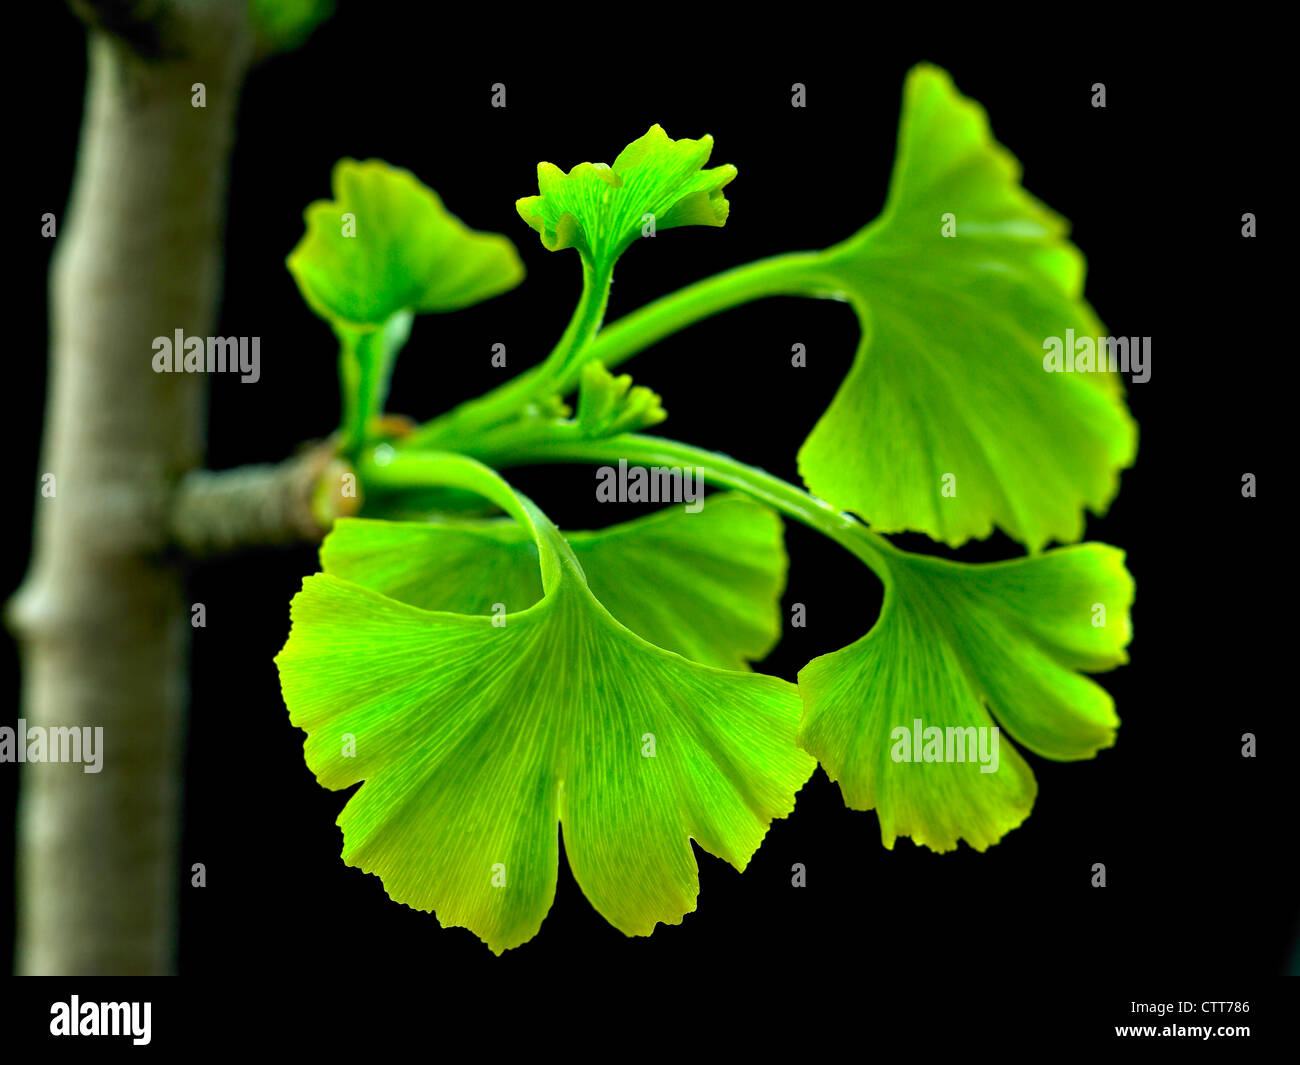 Gingko biloba, Ginkgo, Maidenhair tree, Green leaves emerging on branch against a black background. Stock Photo